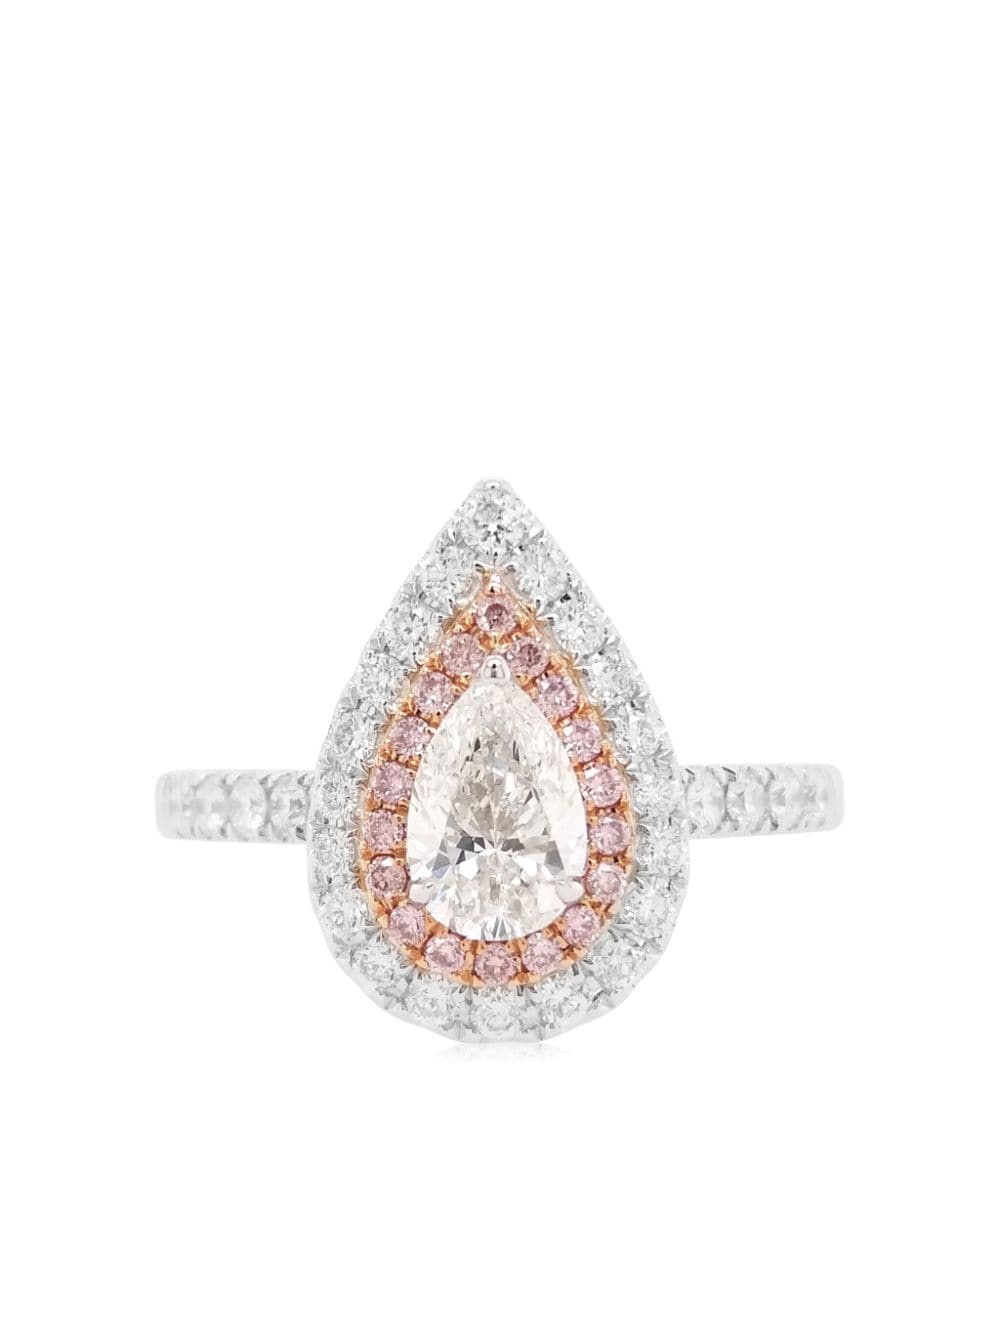 HYT Jewelry 18kt white gold and platinum diamond ring - Pink von HYT Jewelry